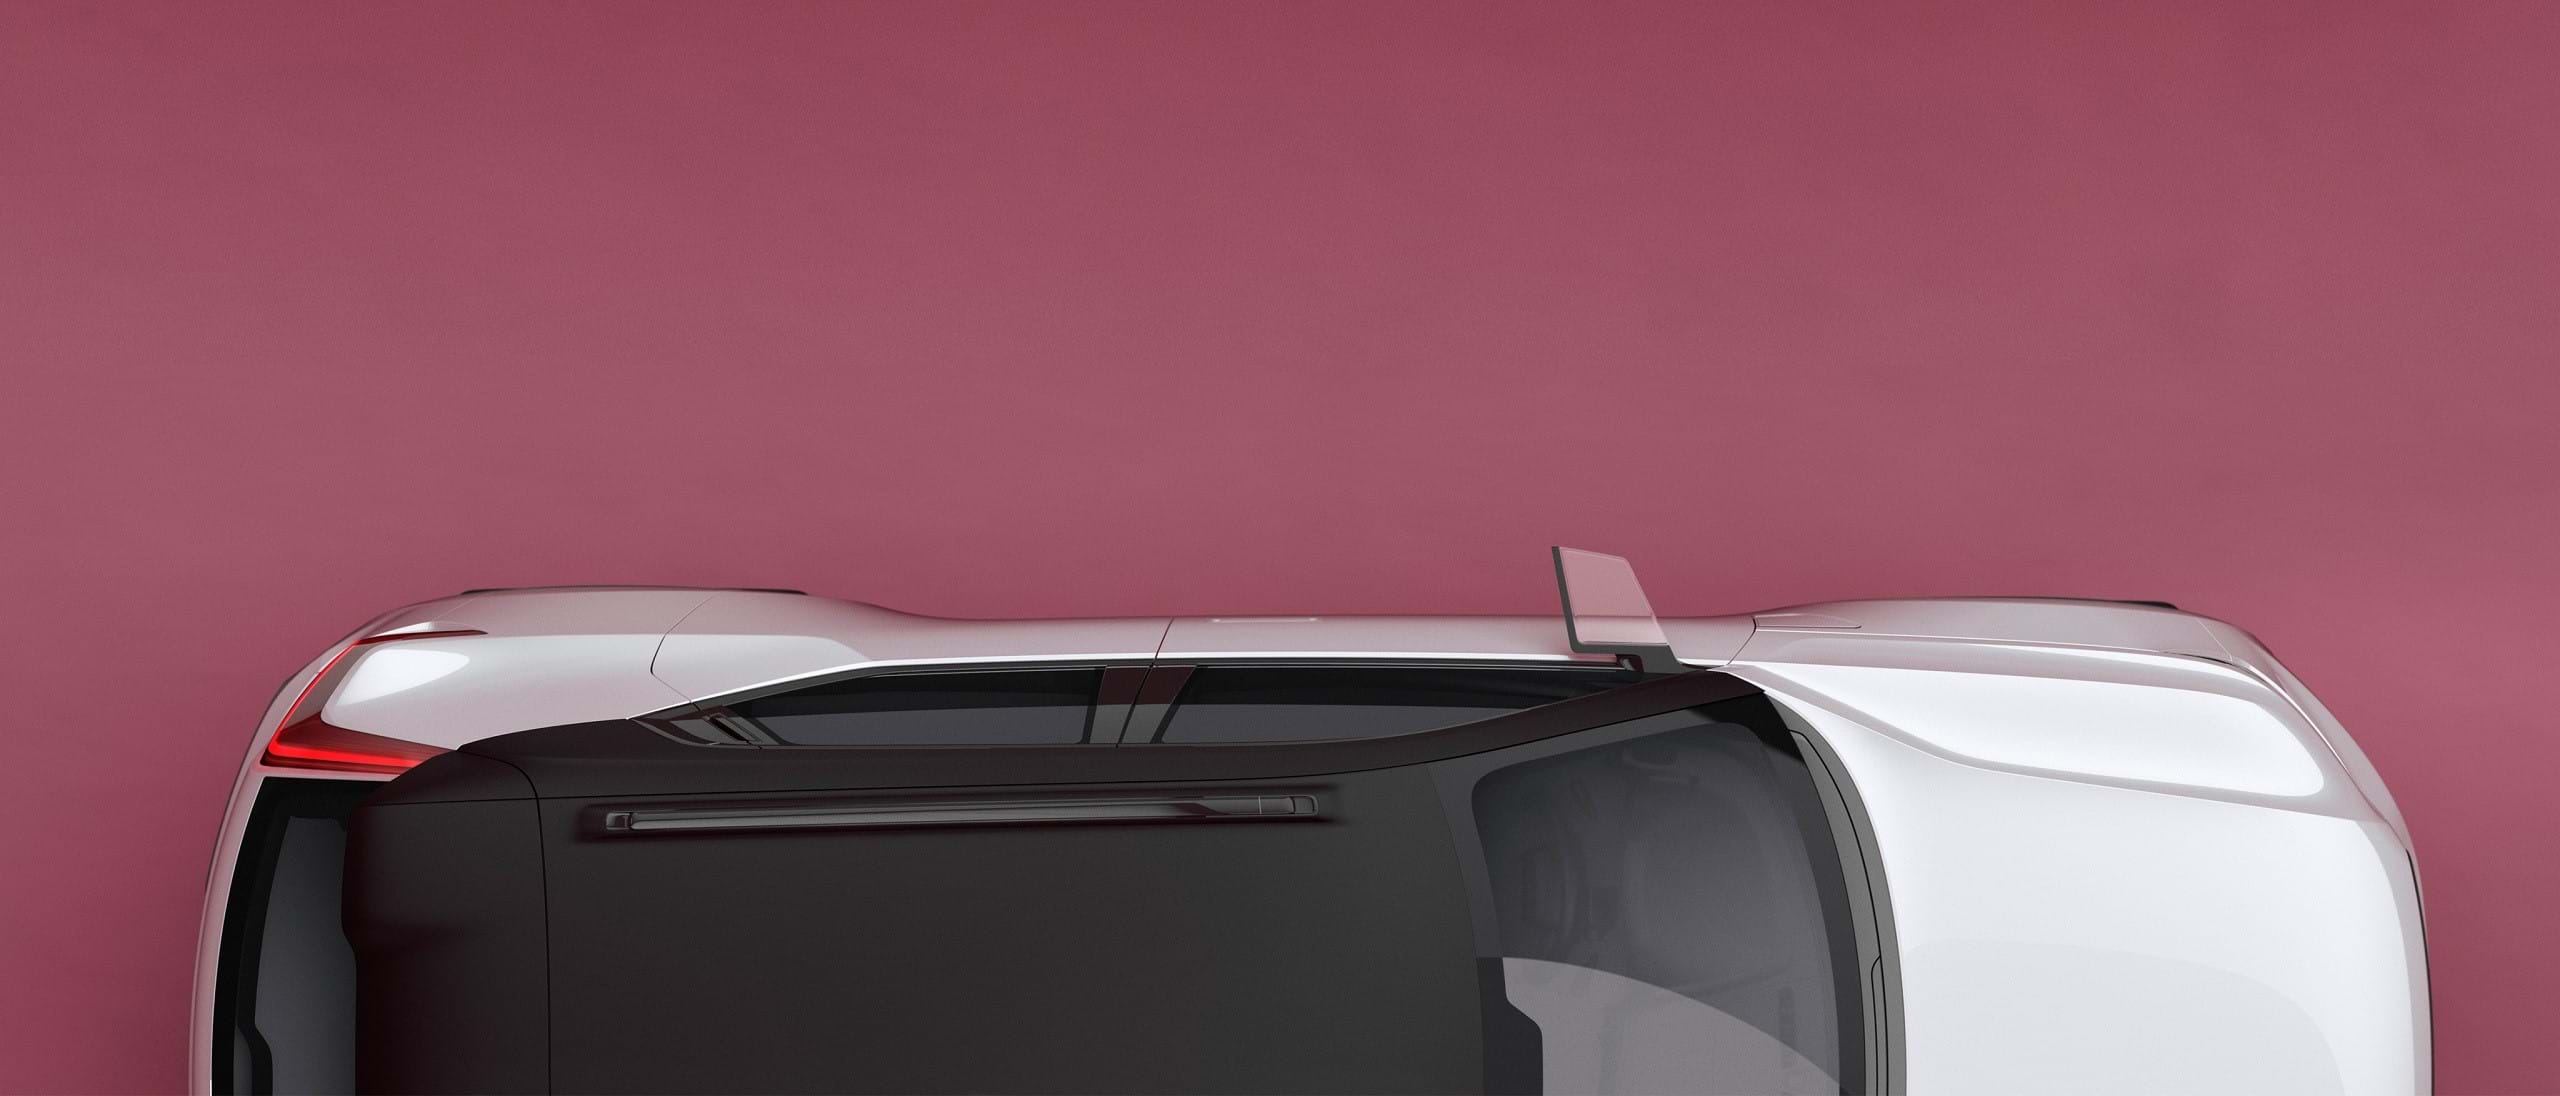 Bijeli Volvo Concept 40 s crnim kontrastnim krovom, prikazan odozgo